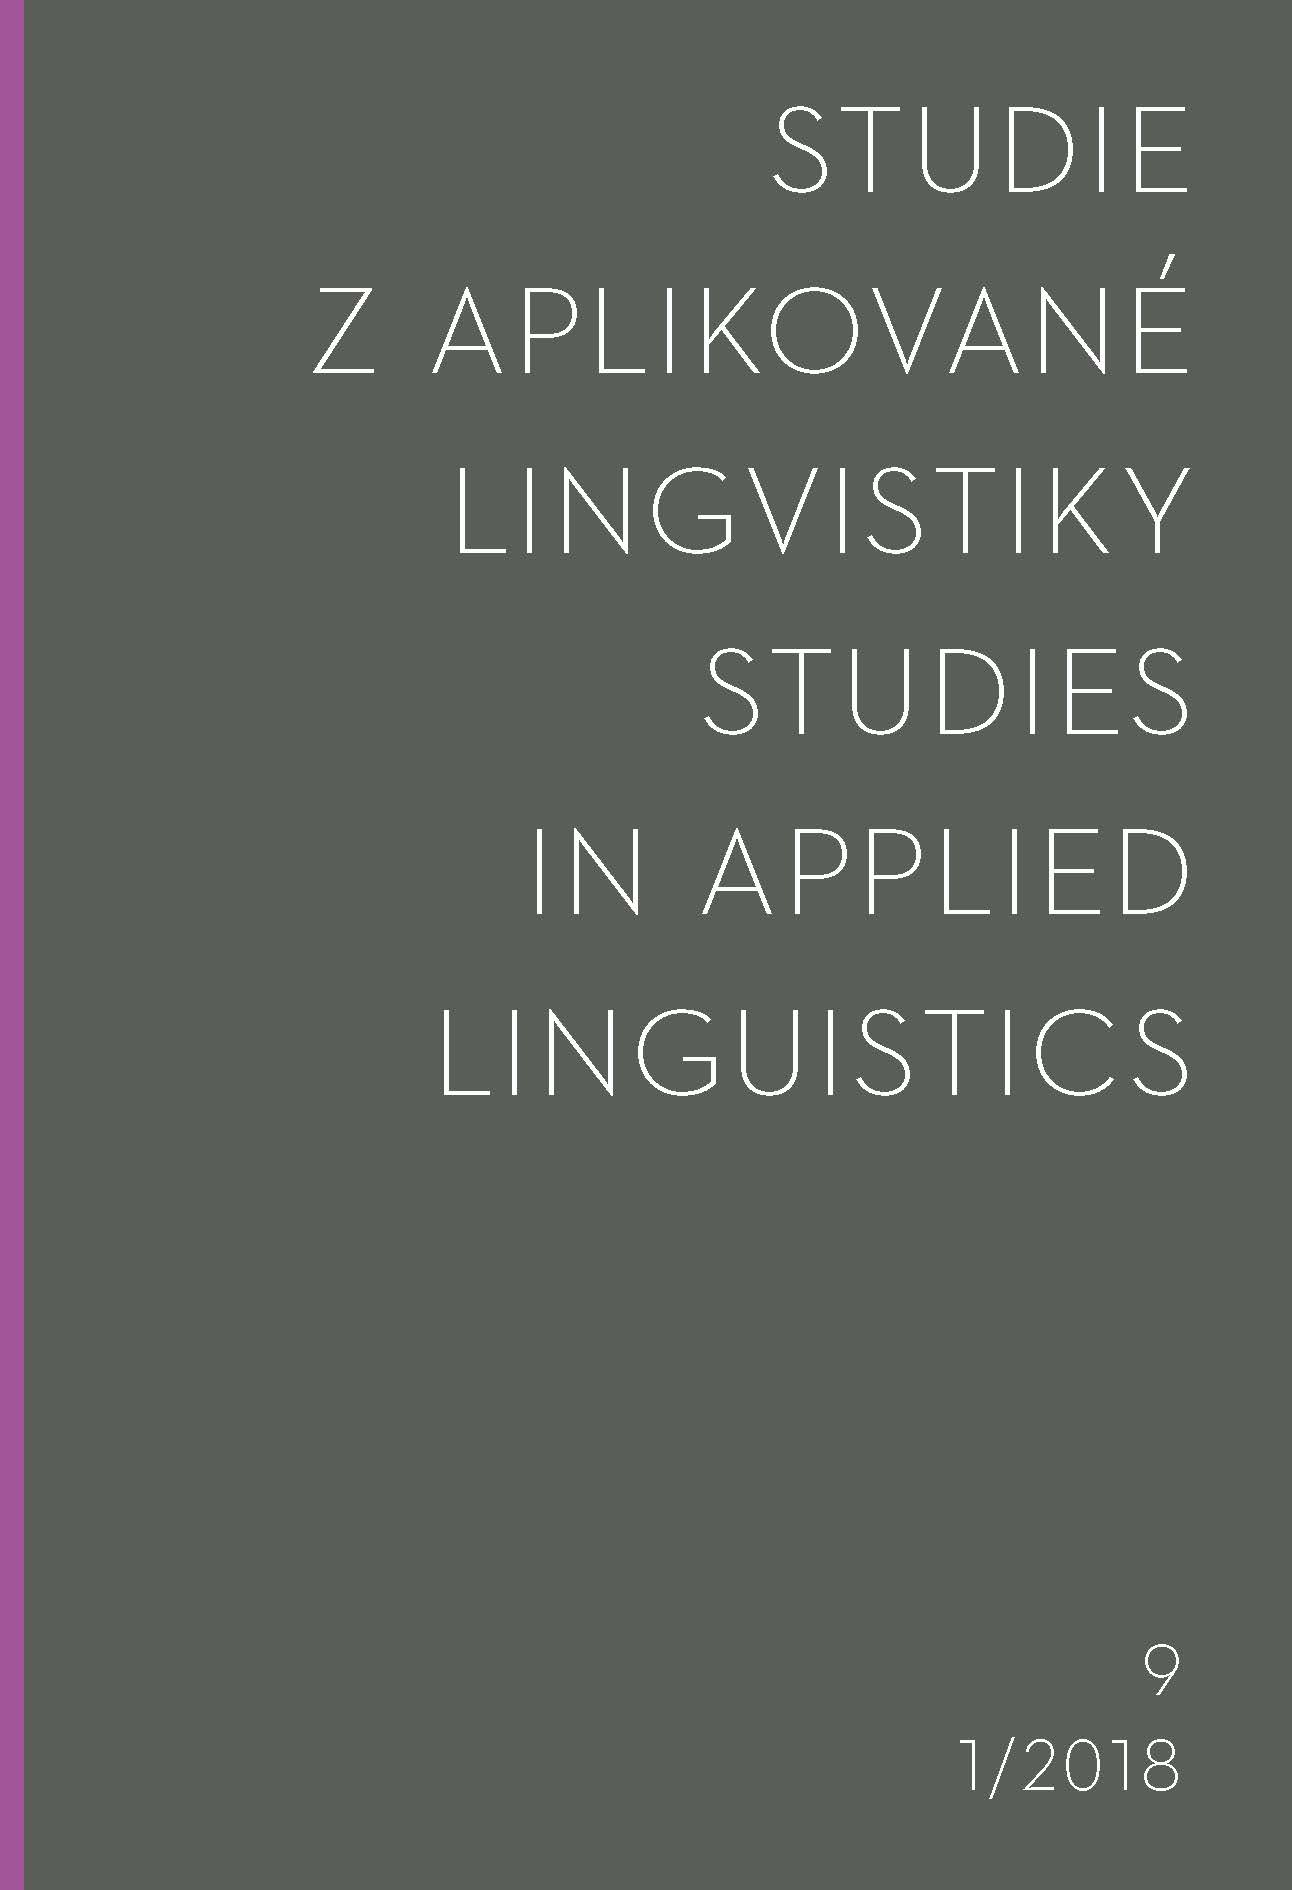 Studies in Applied Linguistics